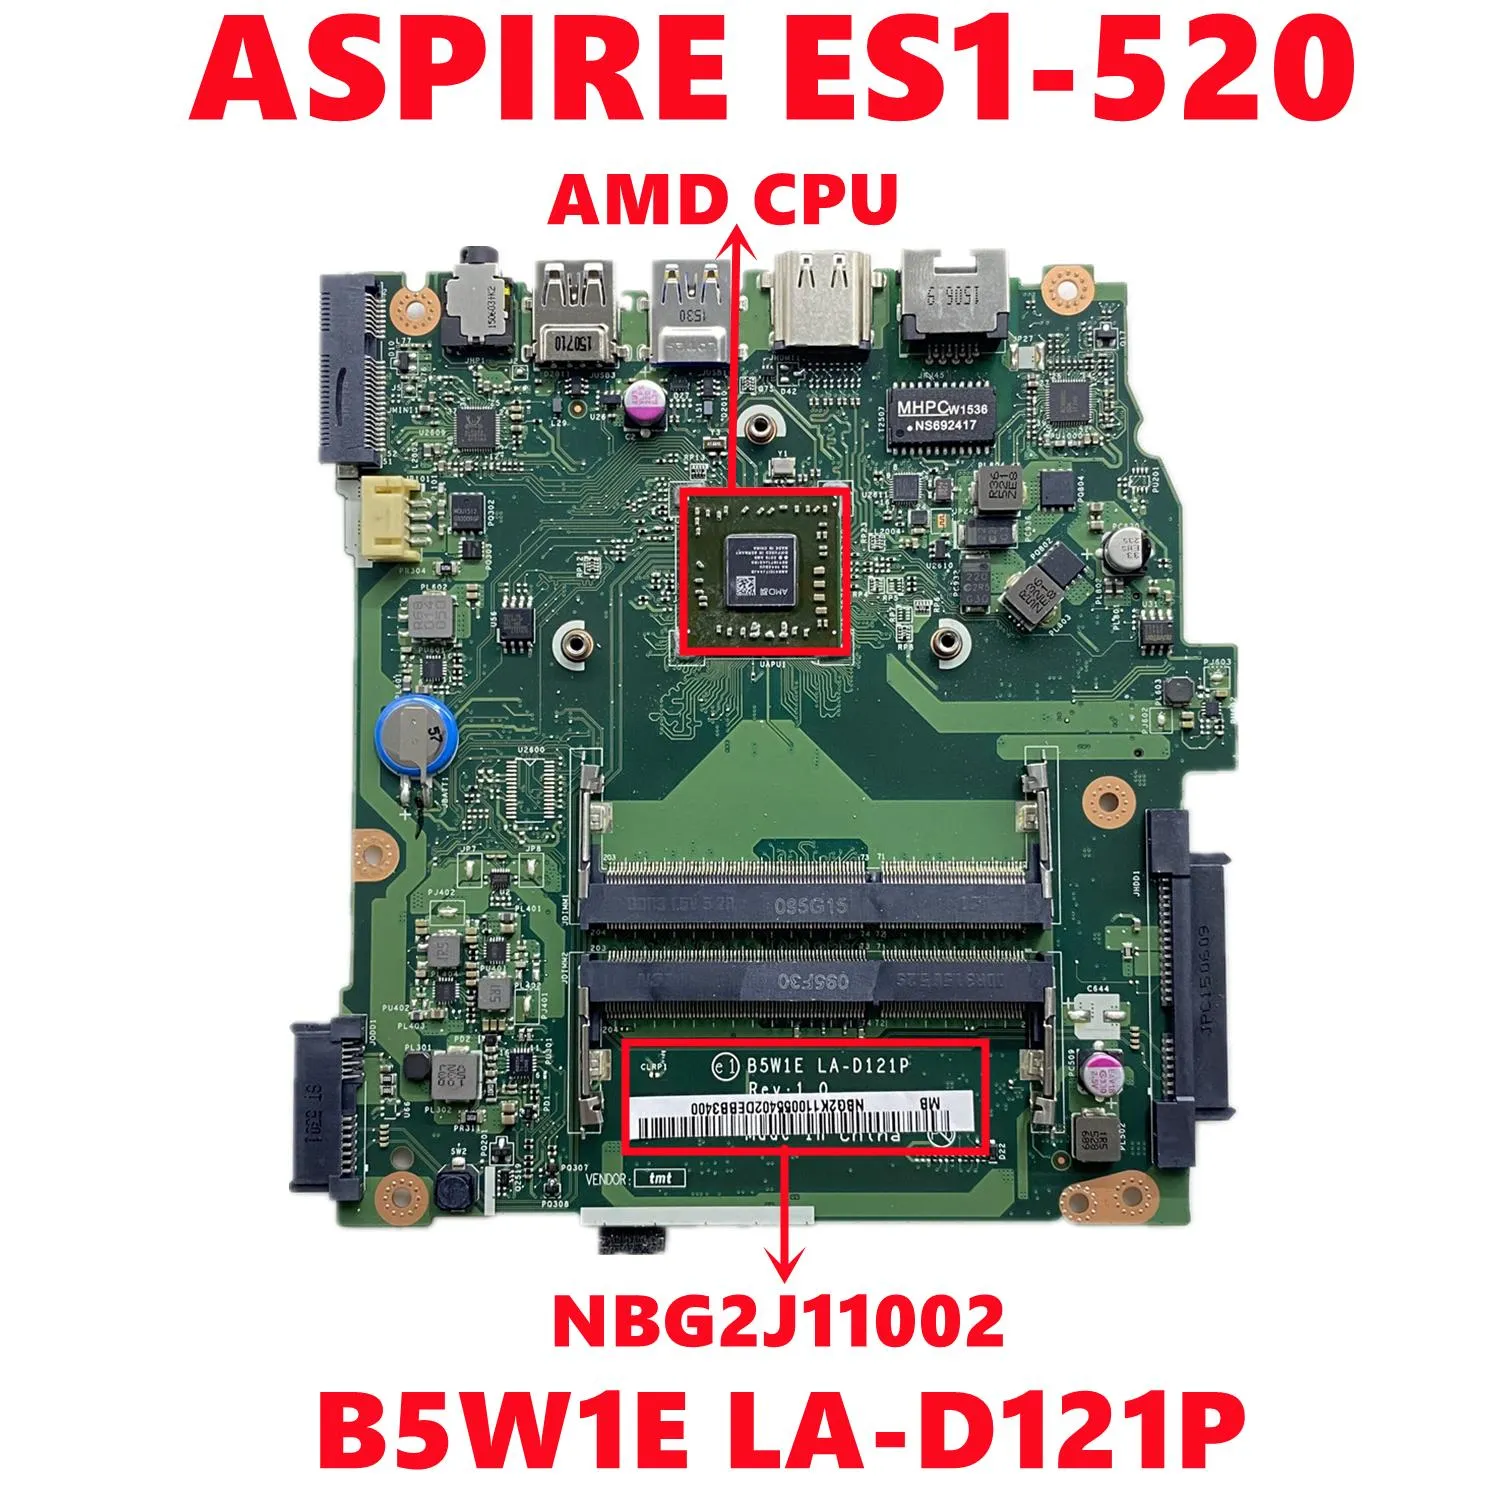 Moderkort NBG2J11002 NB.G2J11.002 för Acer Aspire ES1520 Laptop Motherboard B5W1E LAD121P Mainboard med AMD CPU DDR3 100% Test Working Working